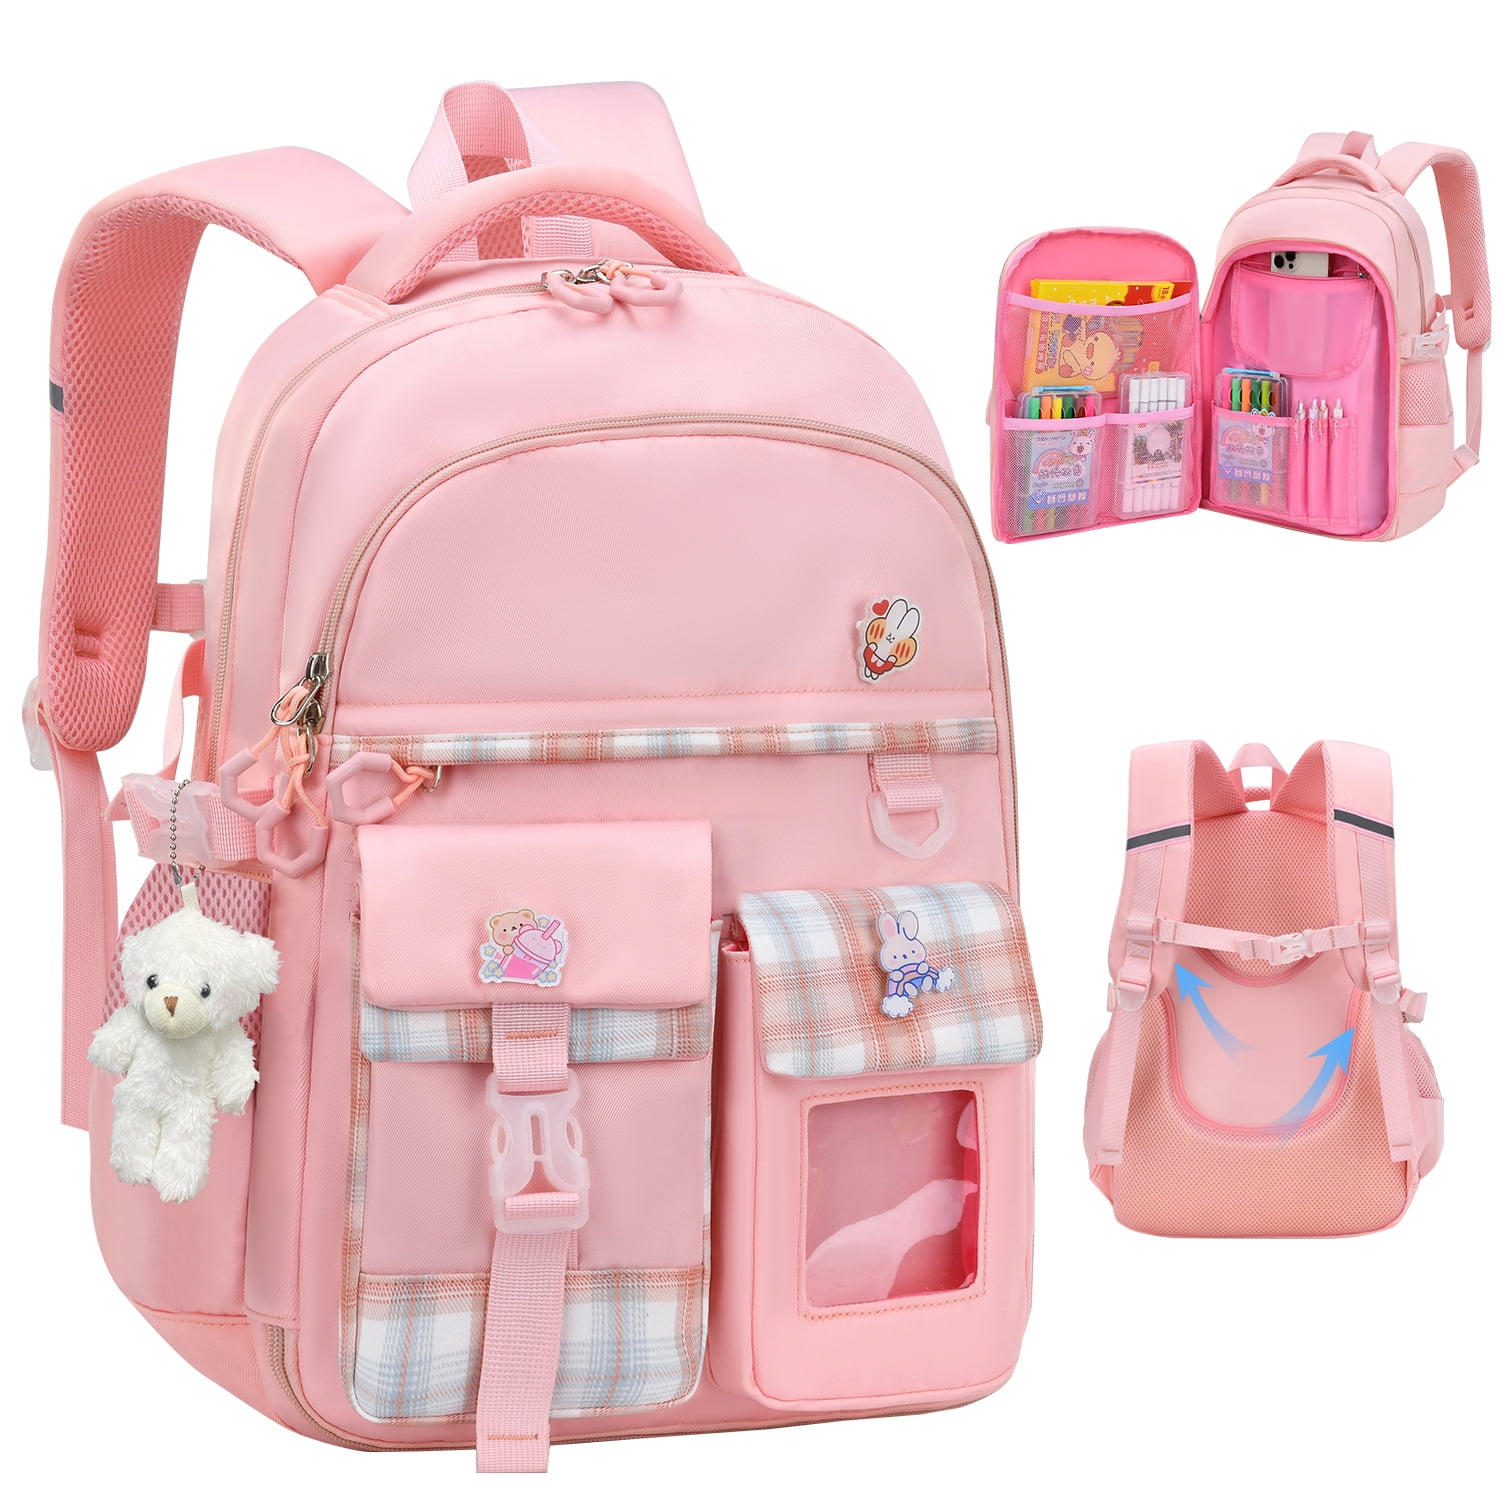 Derstuewe Girls School Backpack with cute doll pendants, Multifunction ...